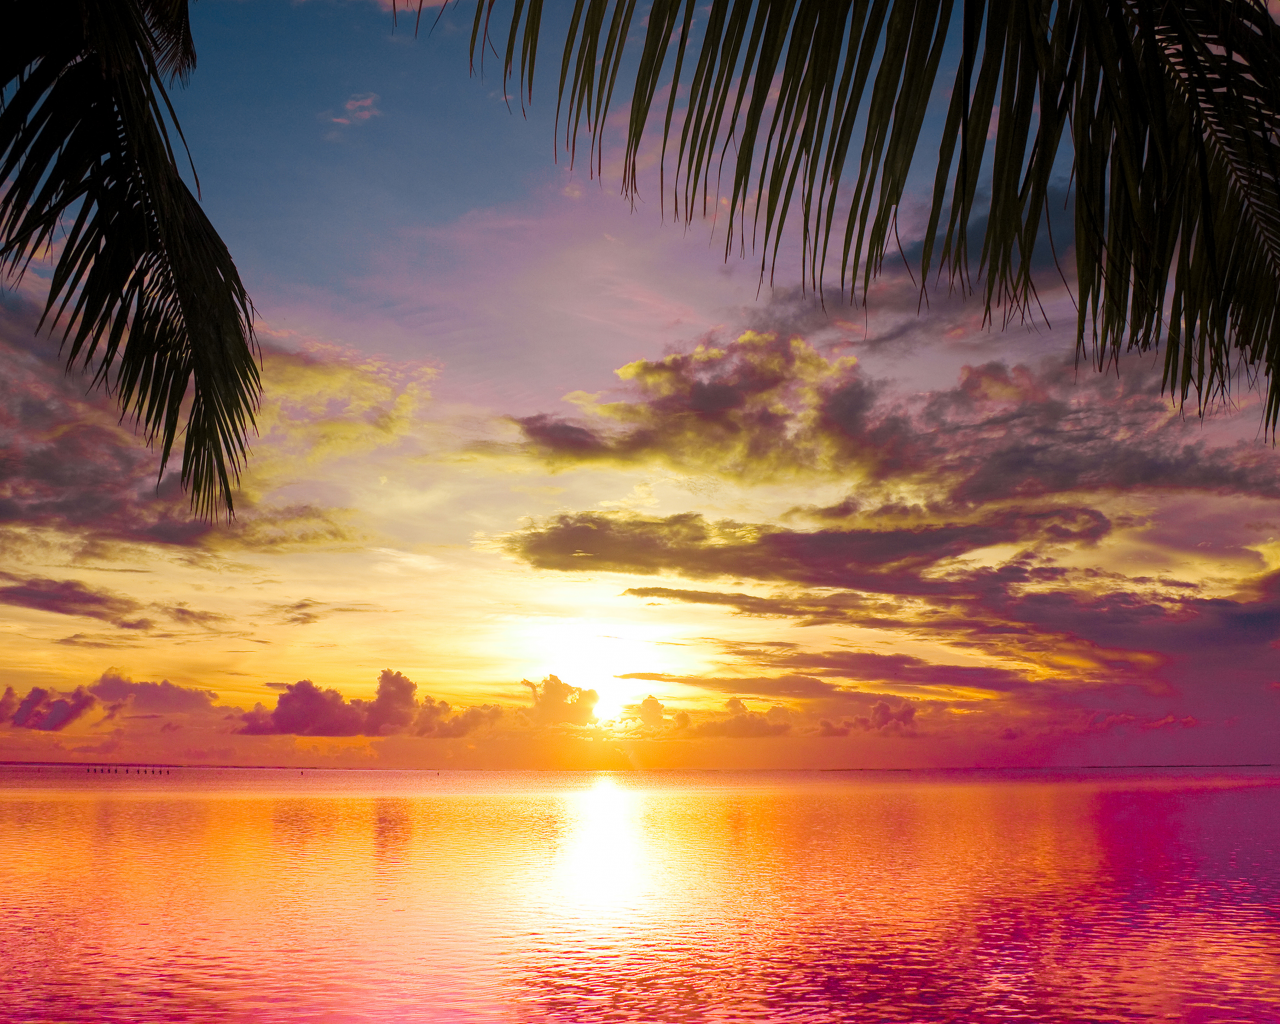 scene, water, landscape, sea, nature, clouds, sunset between palms, sky, beautiful